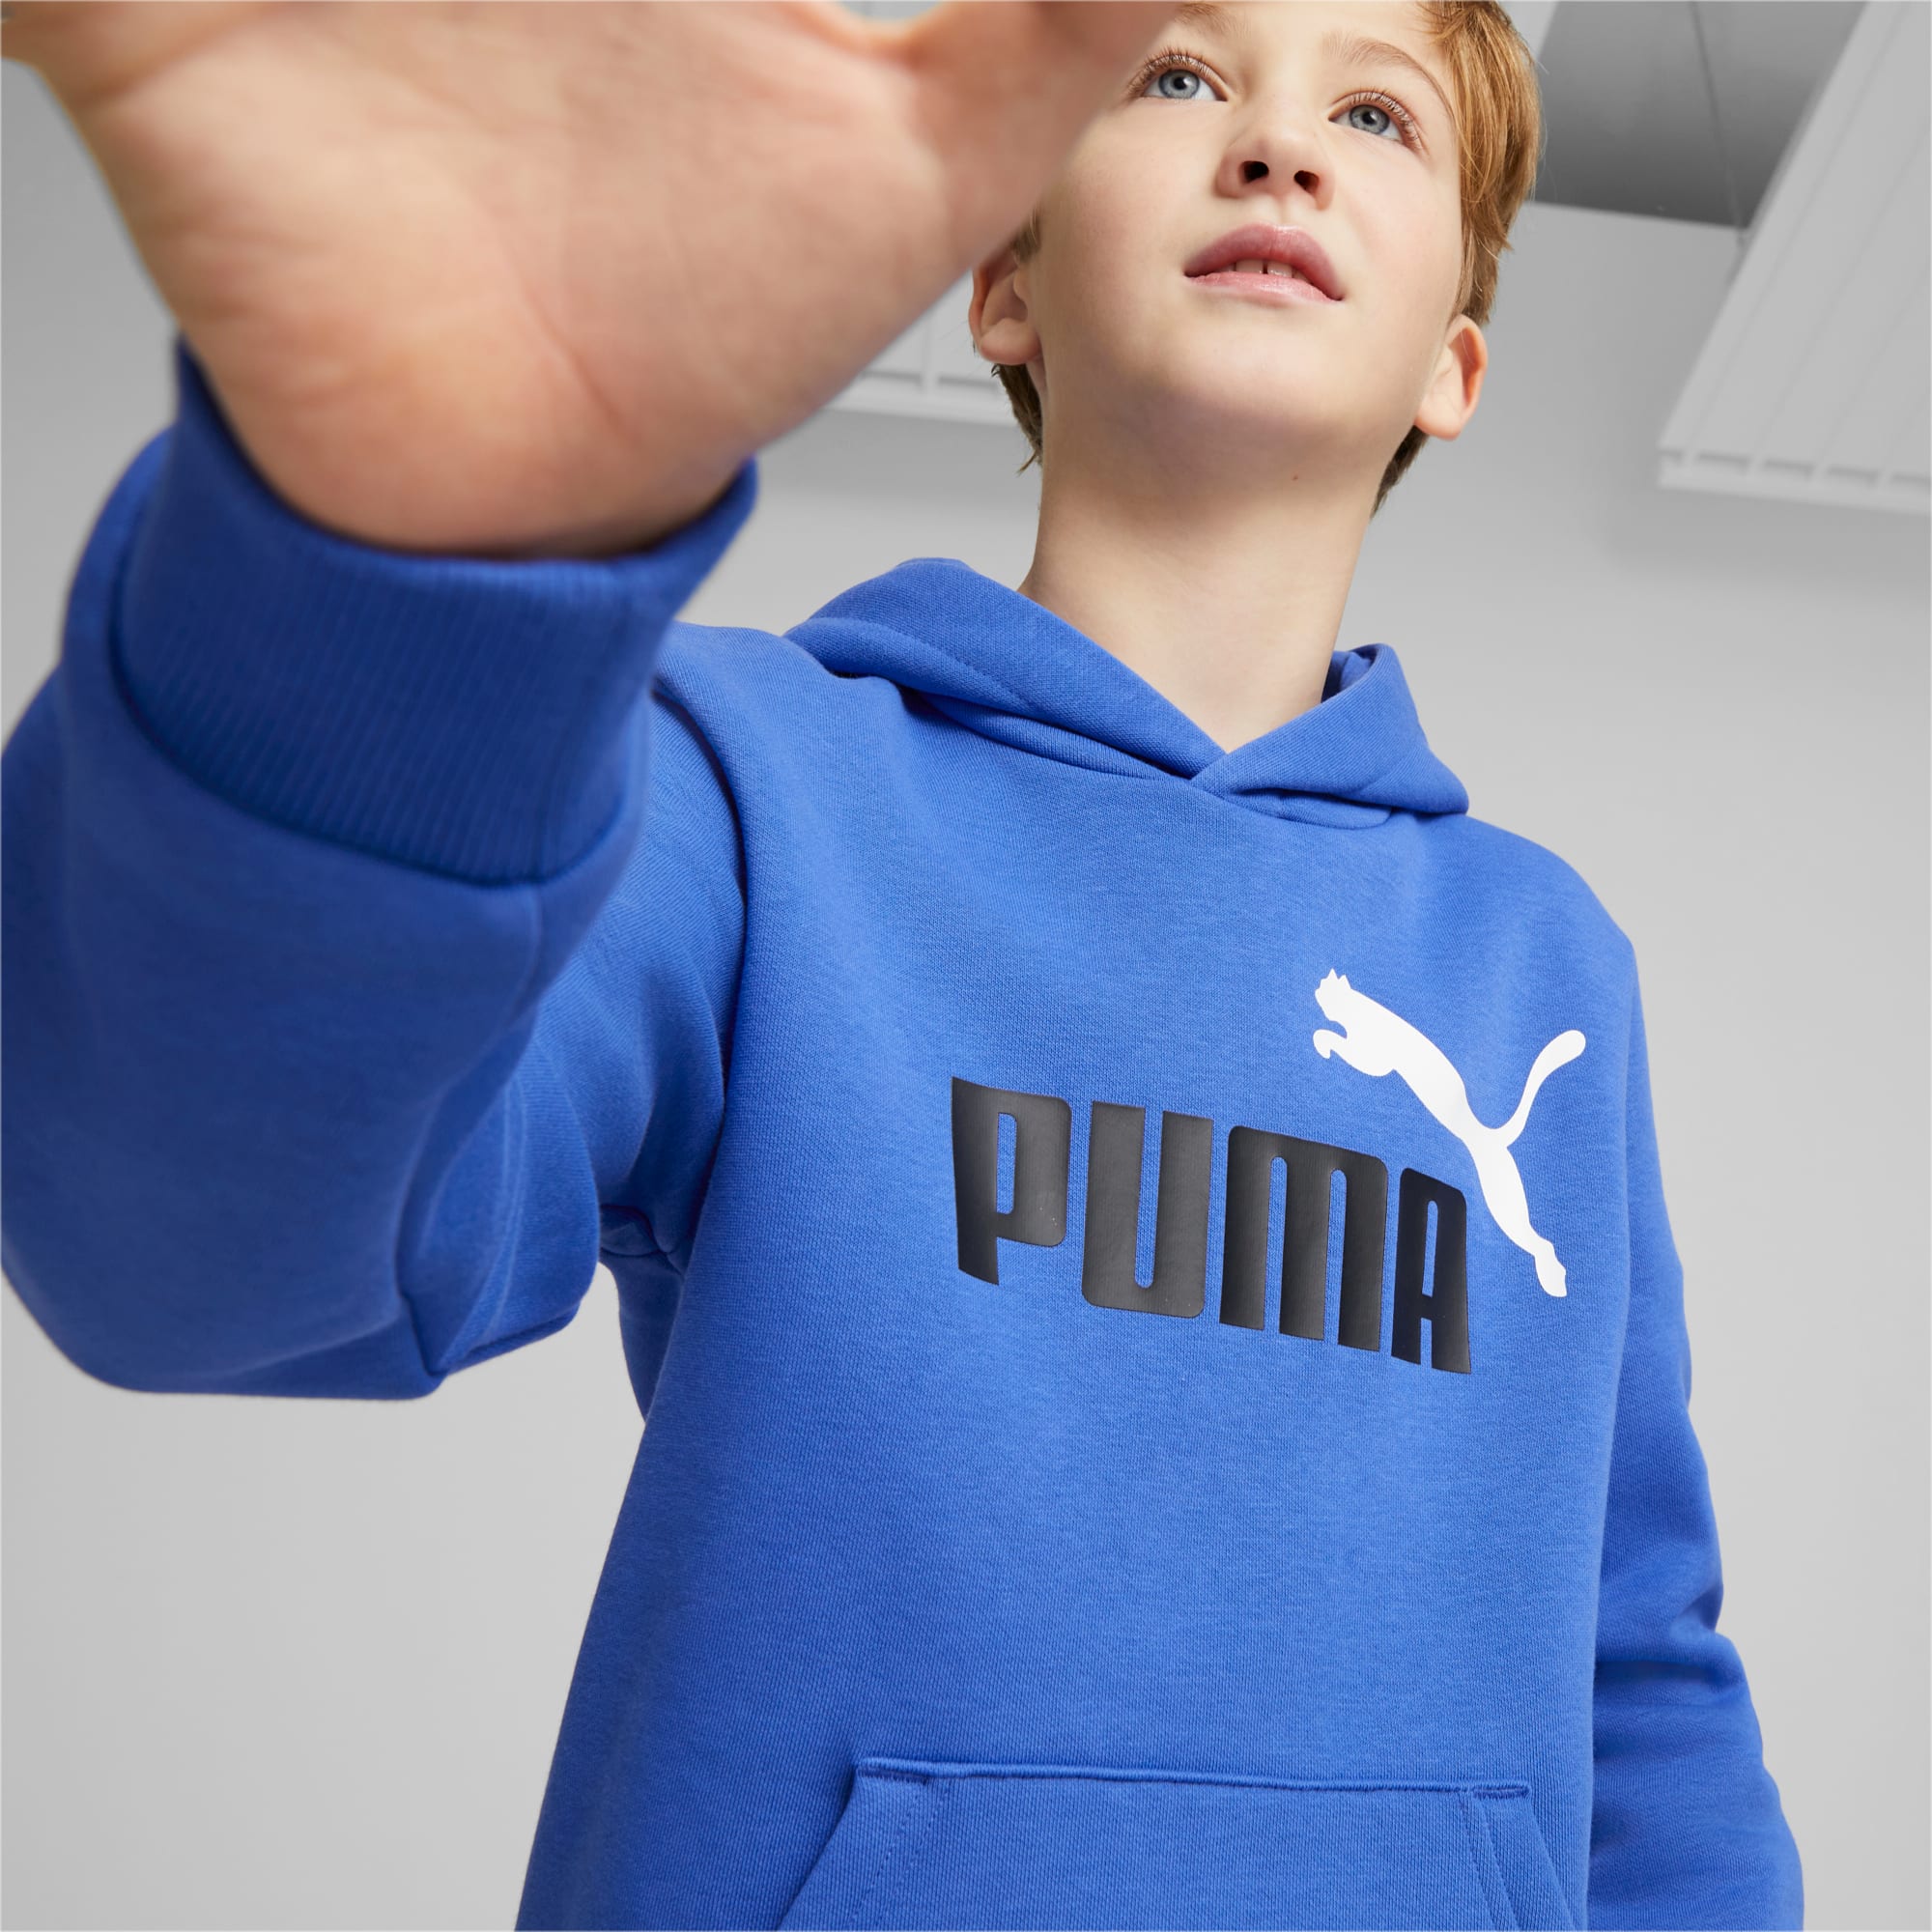 PUMA Essentials+ Two-Tone Big Logo Youth Hoodie, Royal Blue, Size 92, Clothing